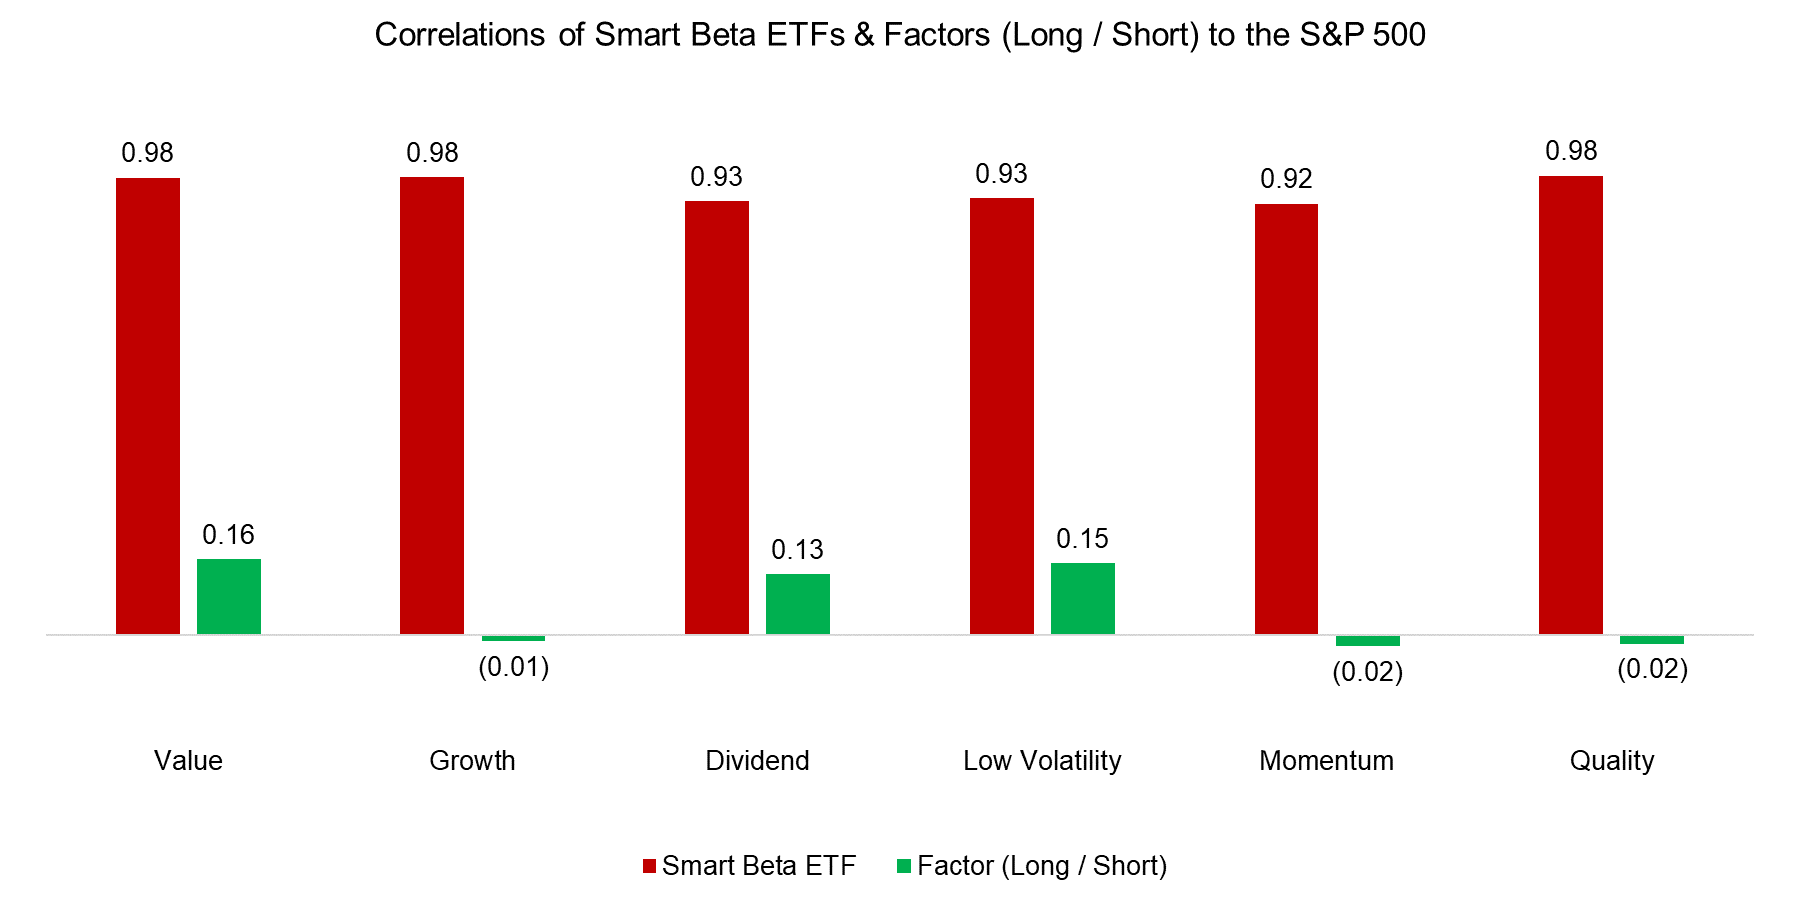 Correlations of Smart Beta ETFs & Factors (Long Short) to the S&P 500